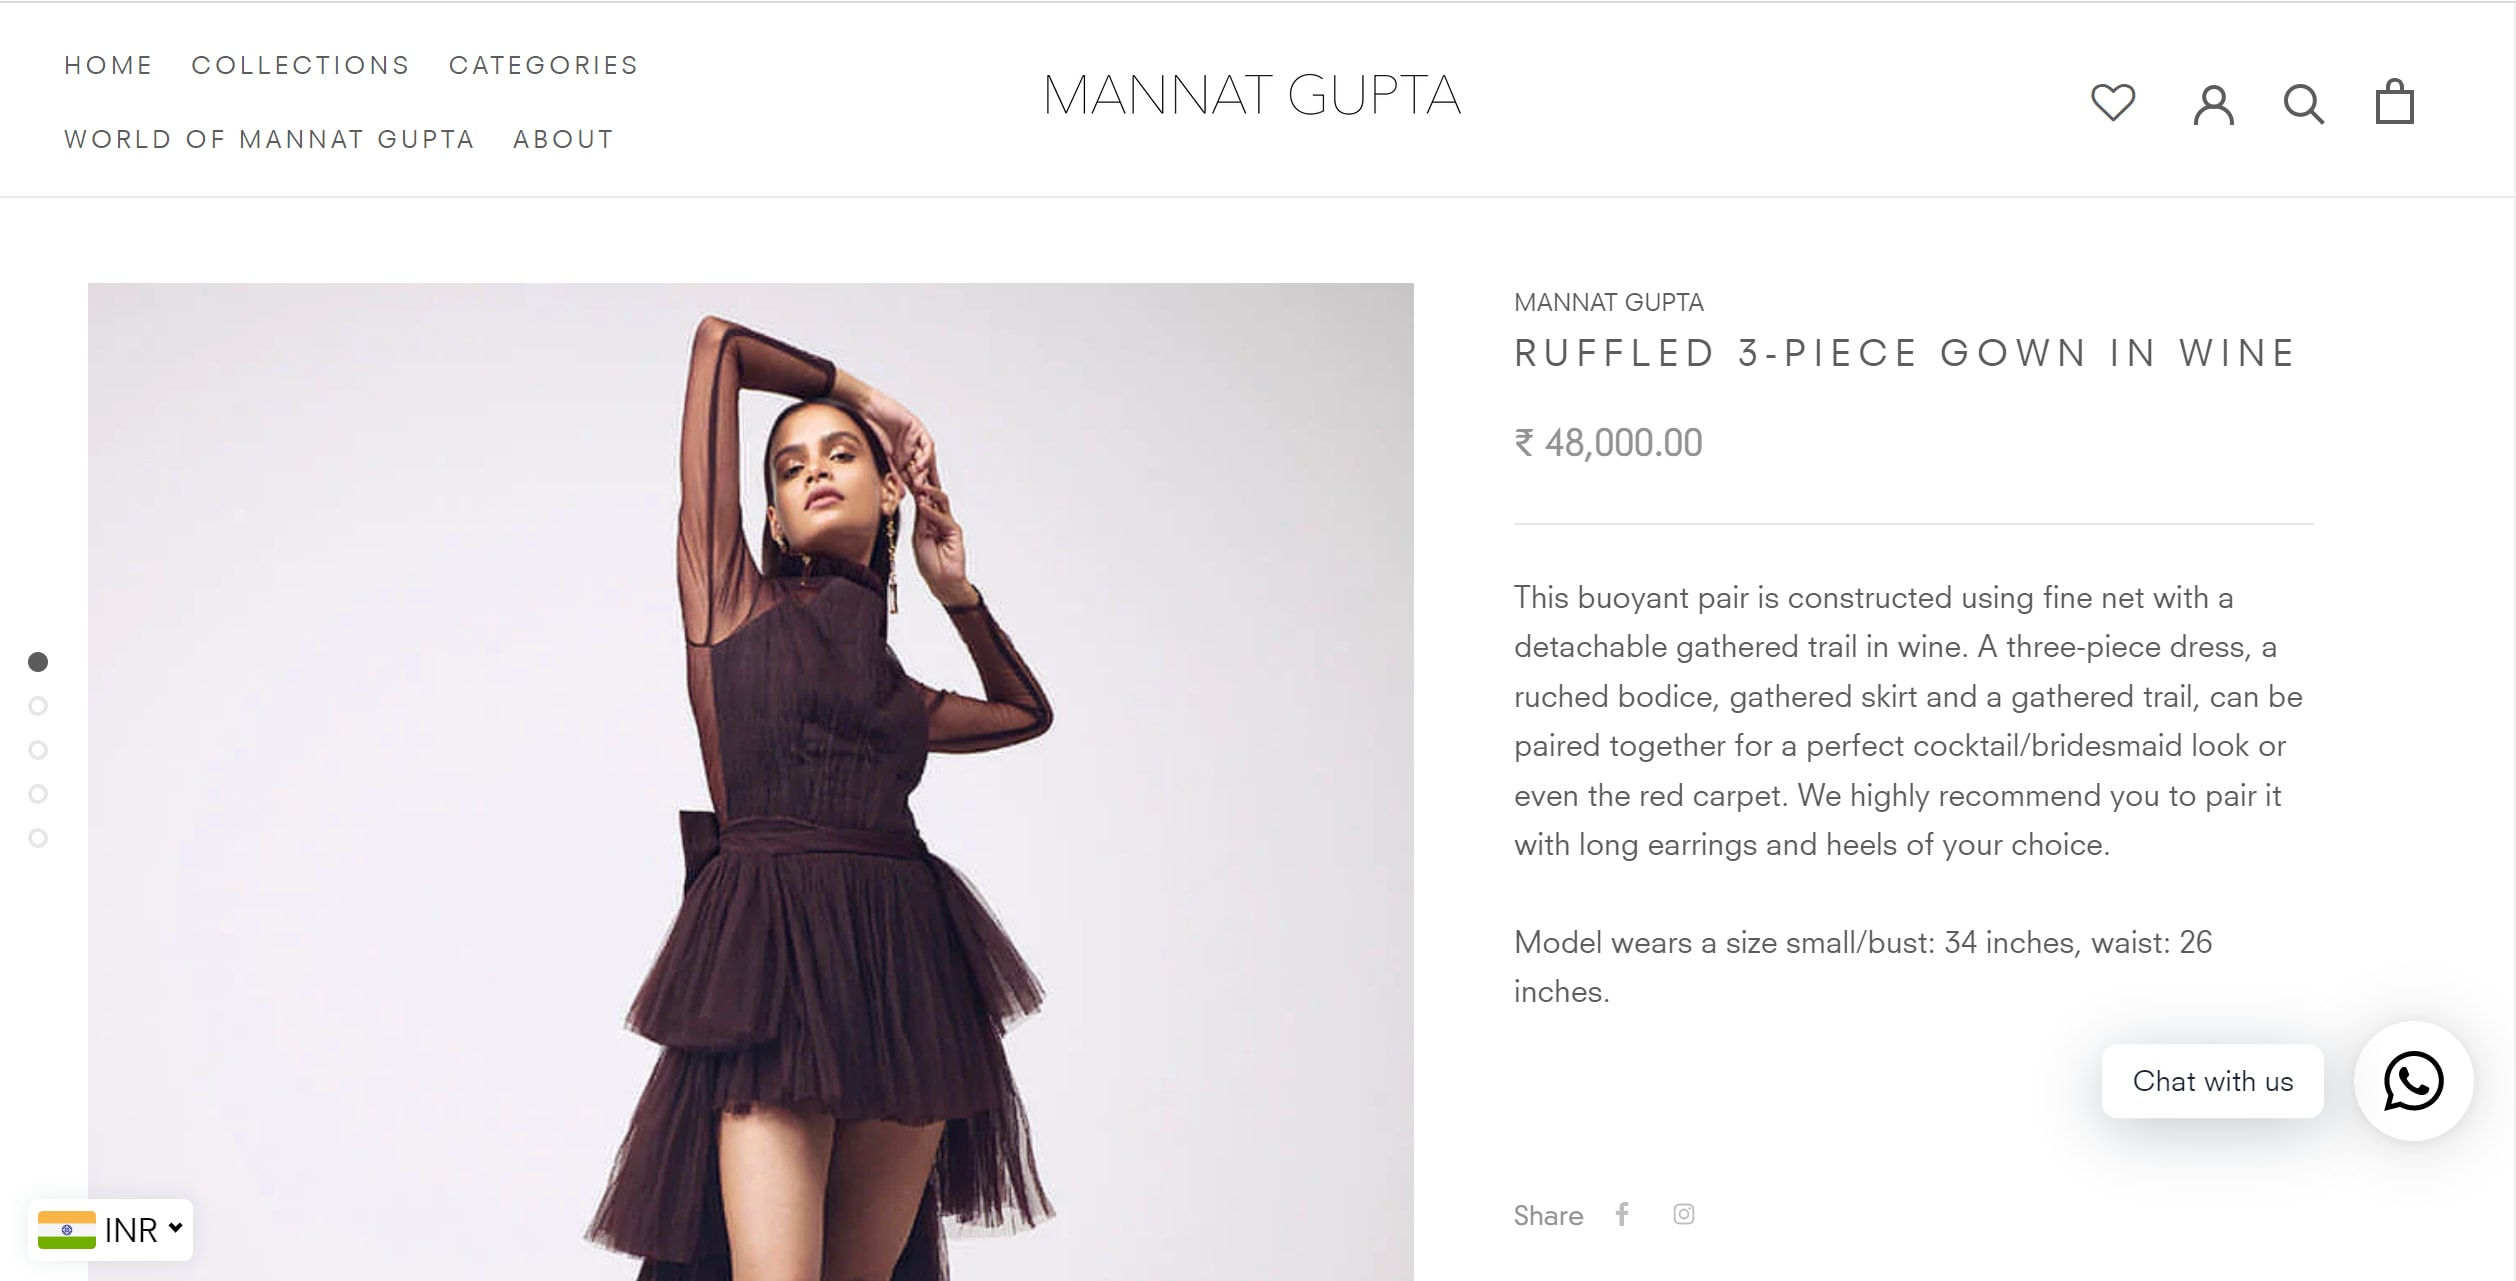 The price of Sanjana's oufit. (mannatgupta.com)